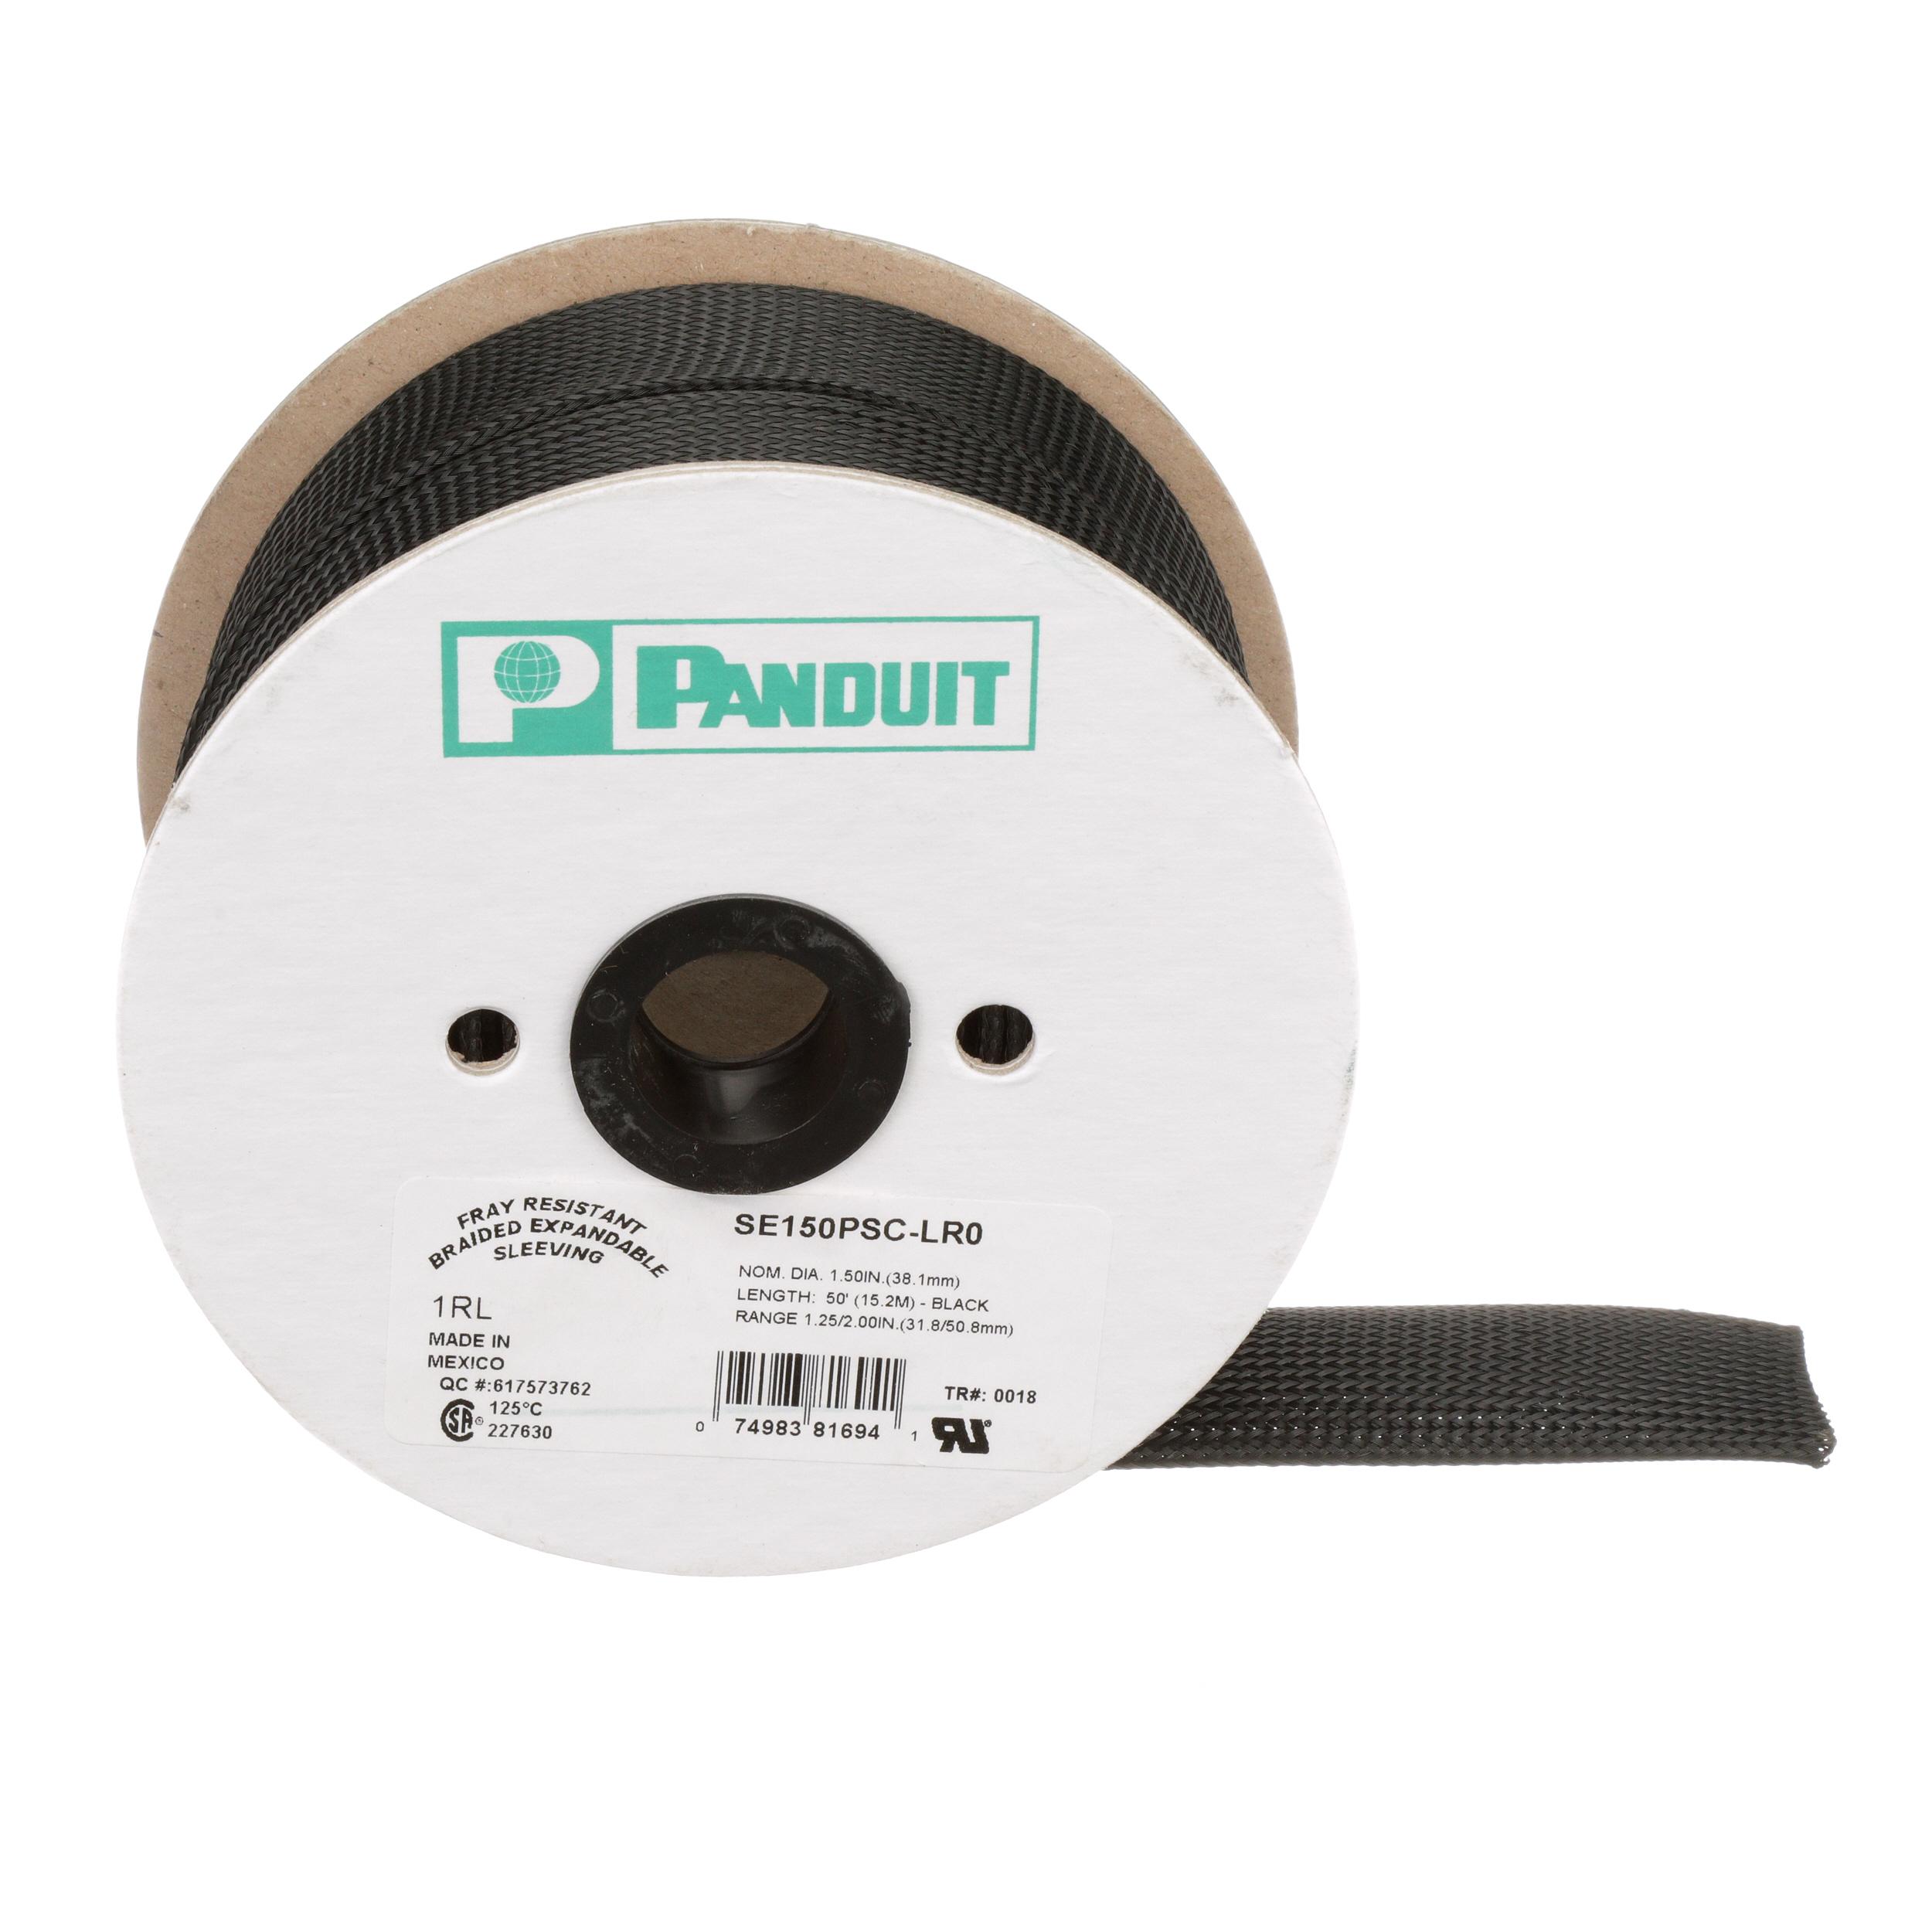 Panduit SE150PSC-LR0 Pan-Wrap Fray Resistant Braided Expandable Sleeving